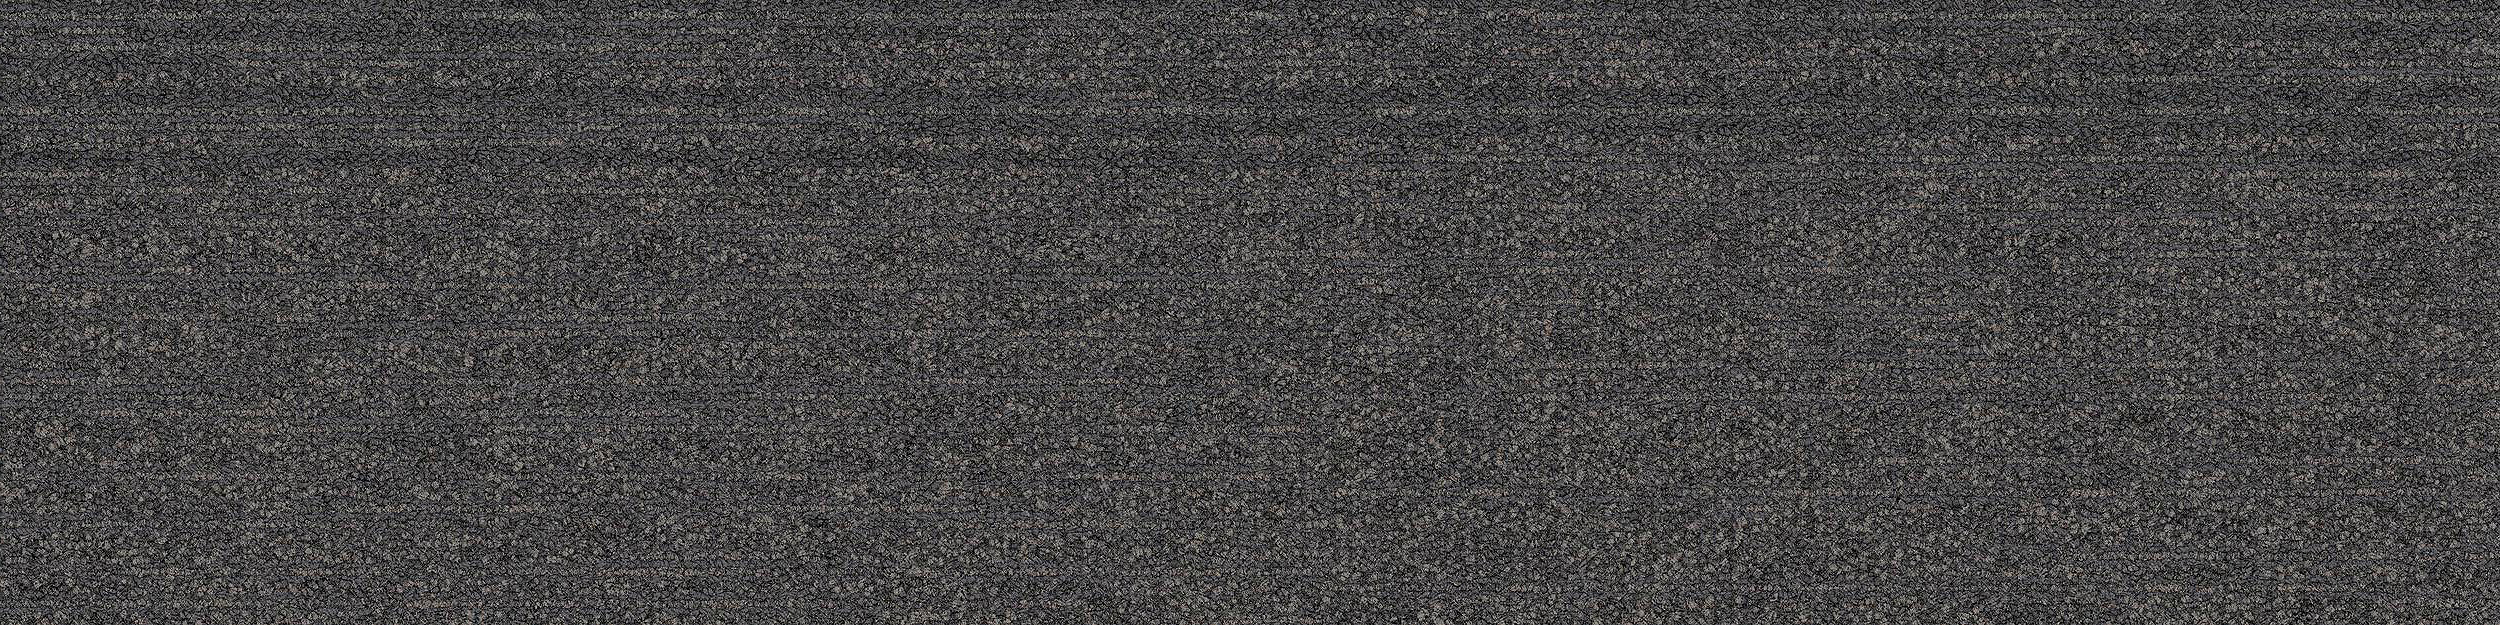 Harmonize Carpet Tile in Iron imagen número 11